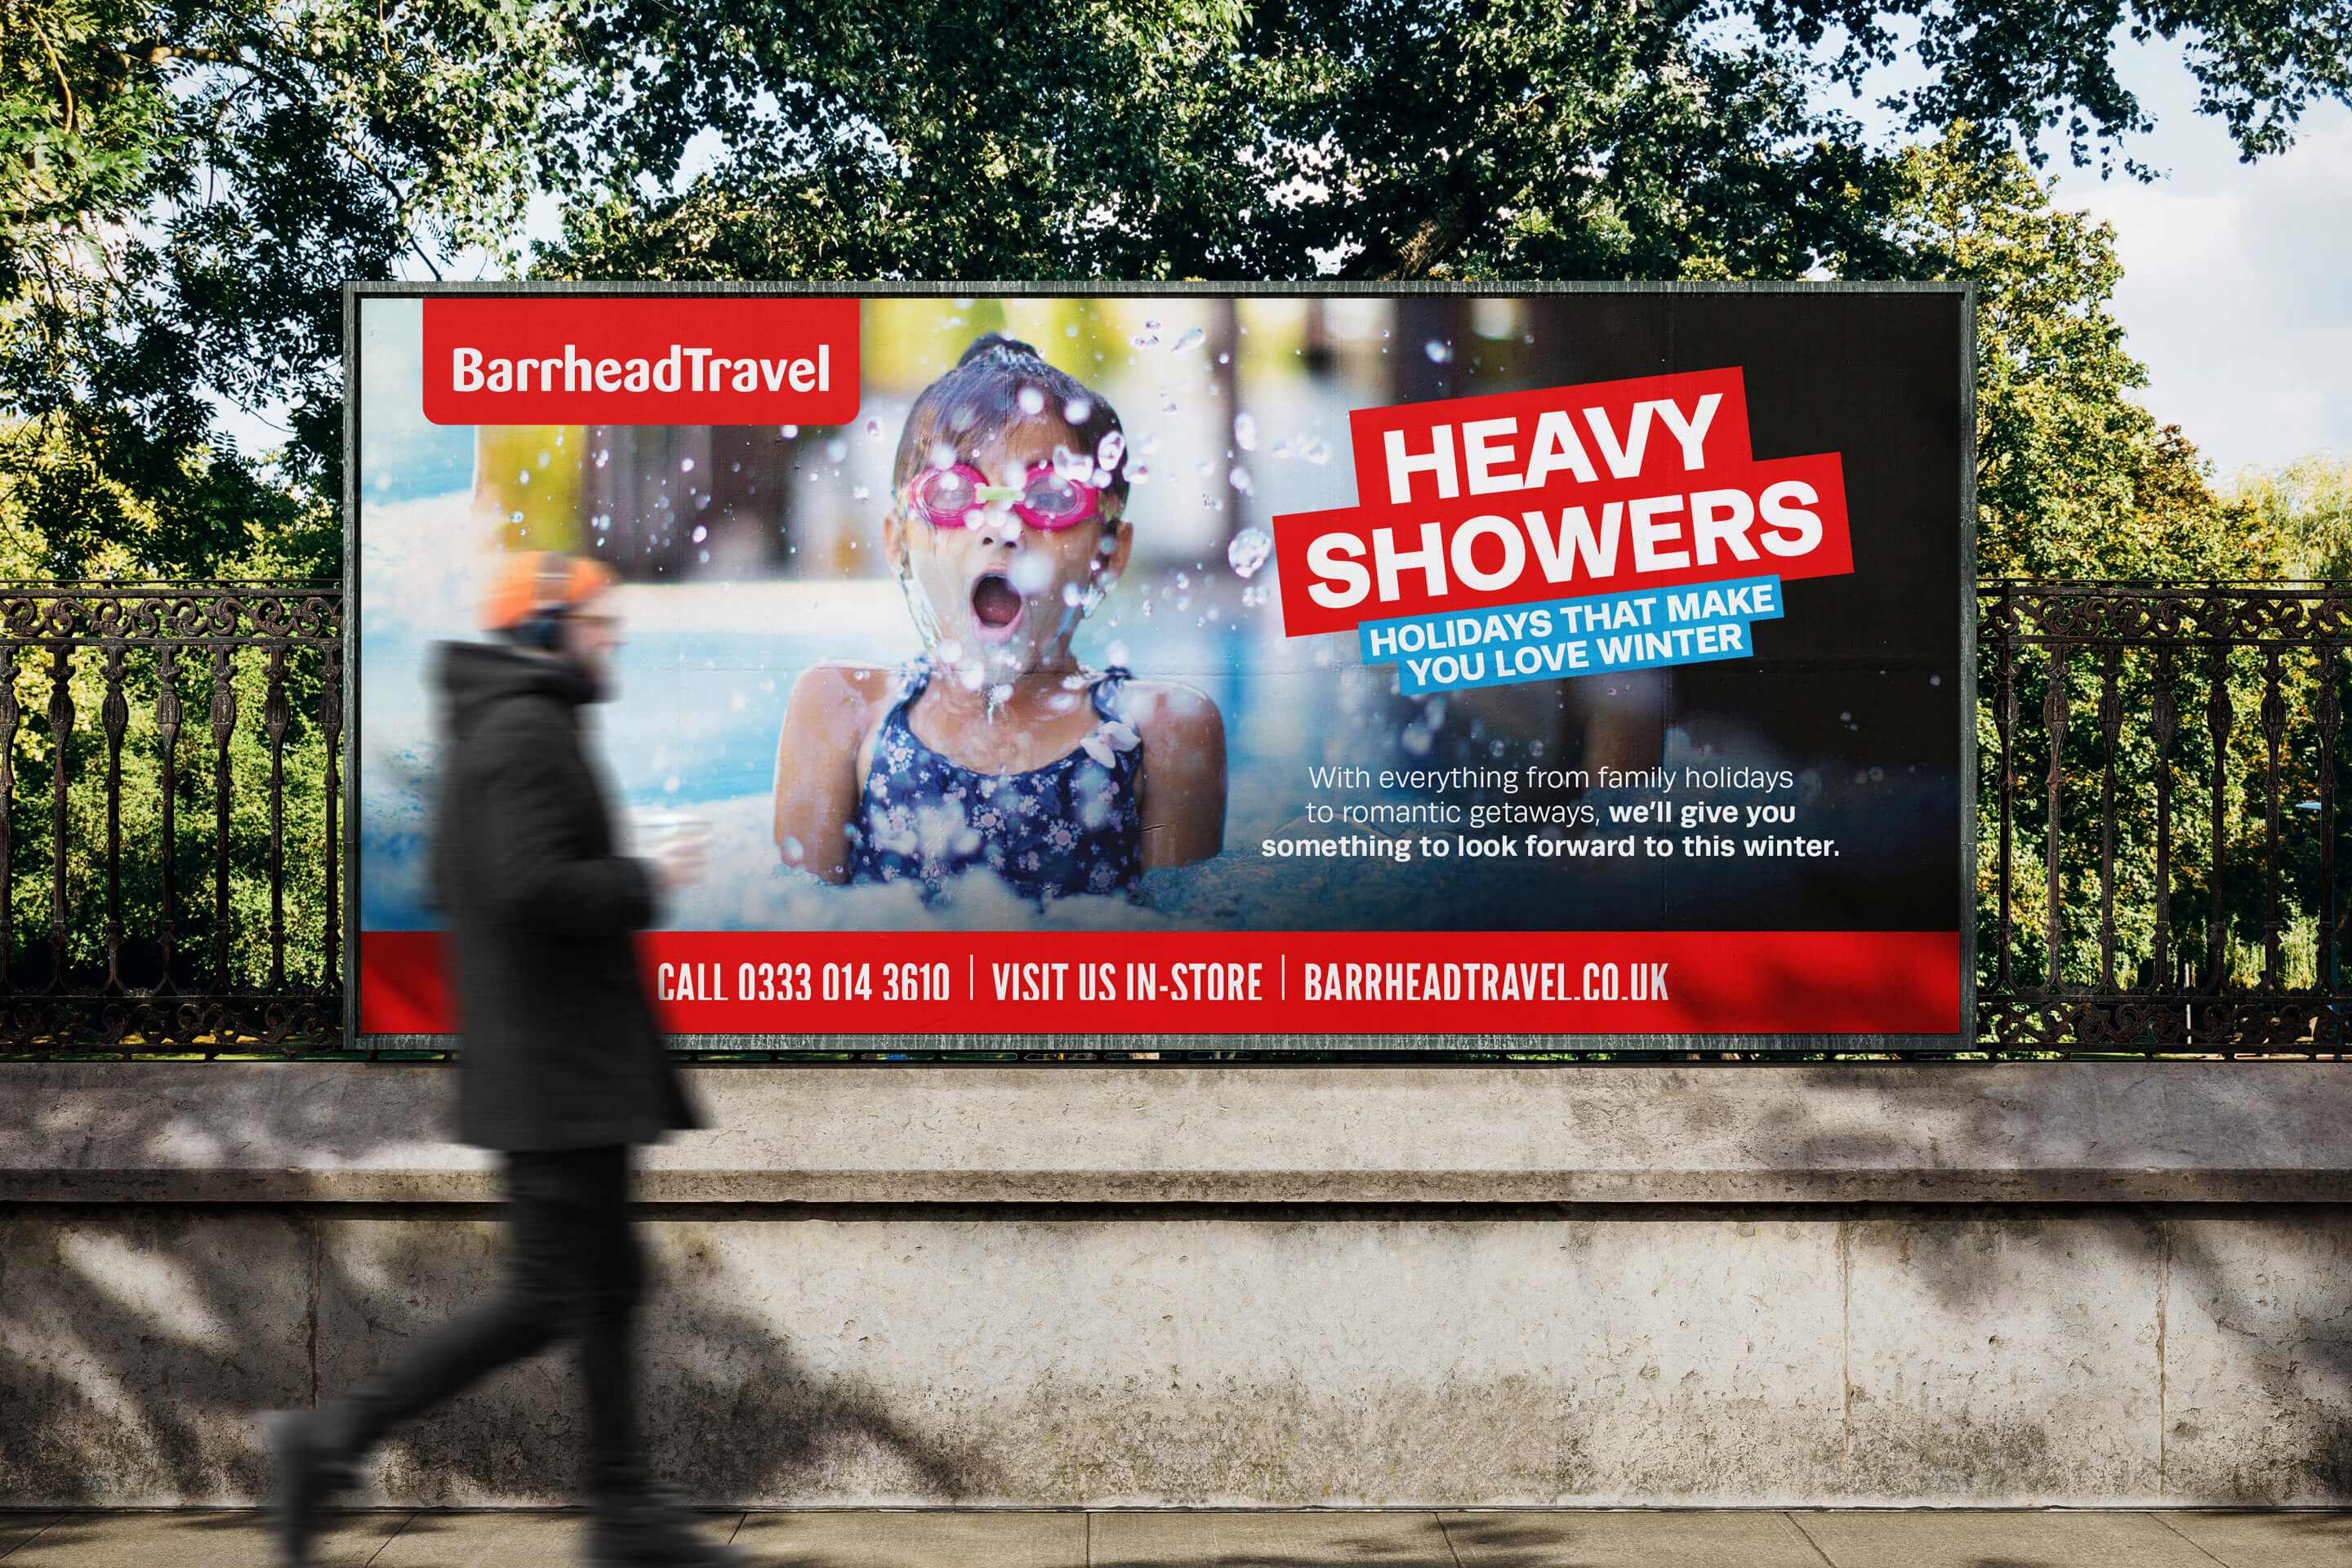 Barrhead Travel Love Winter - Heavy Showers